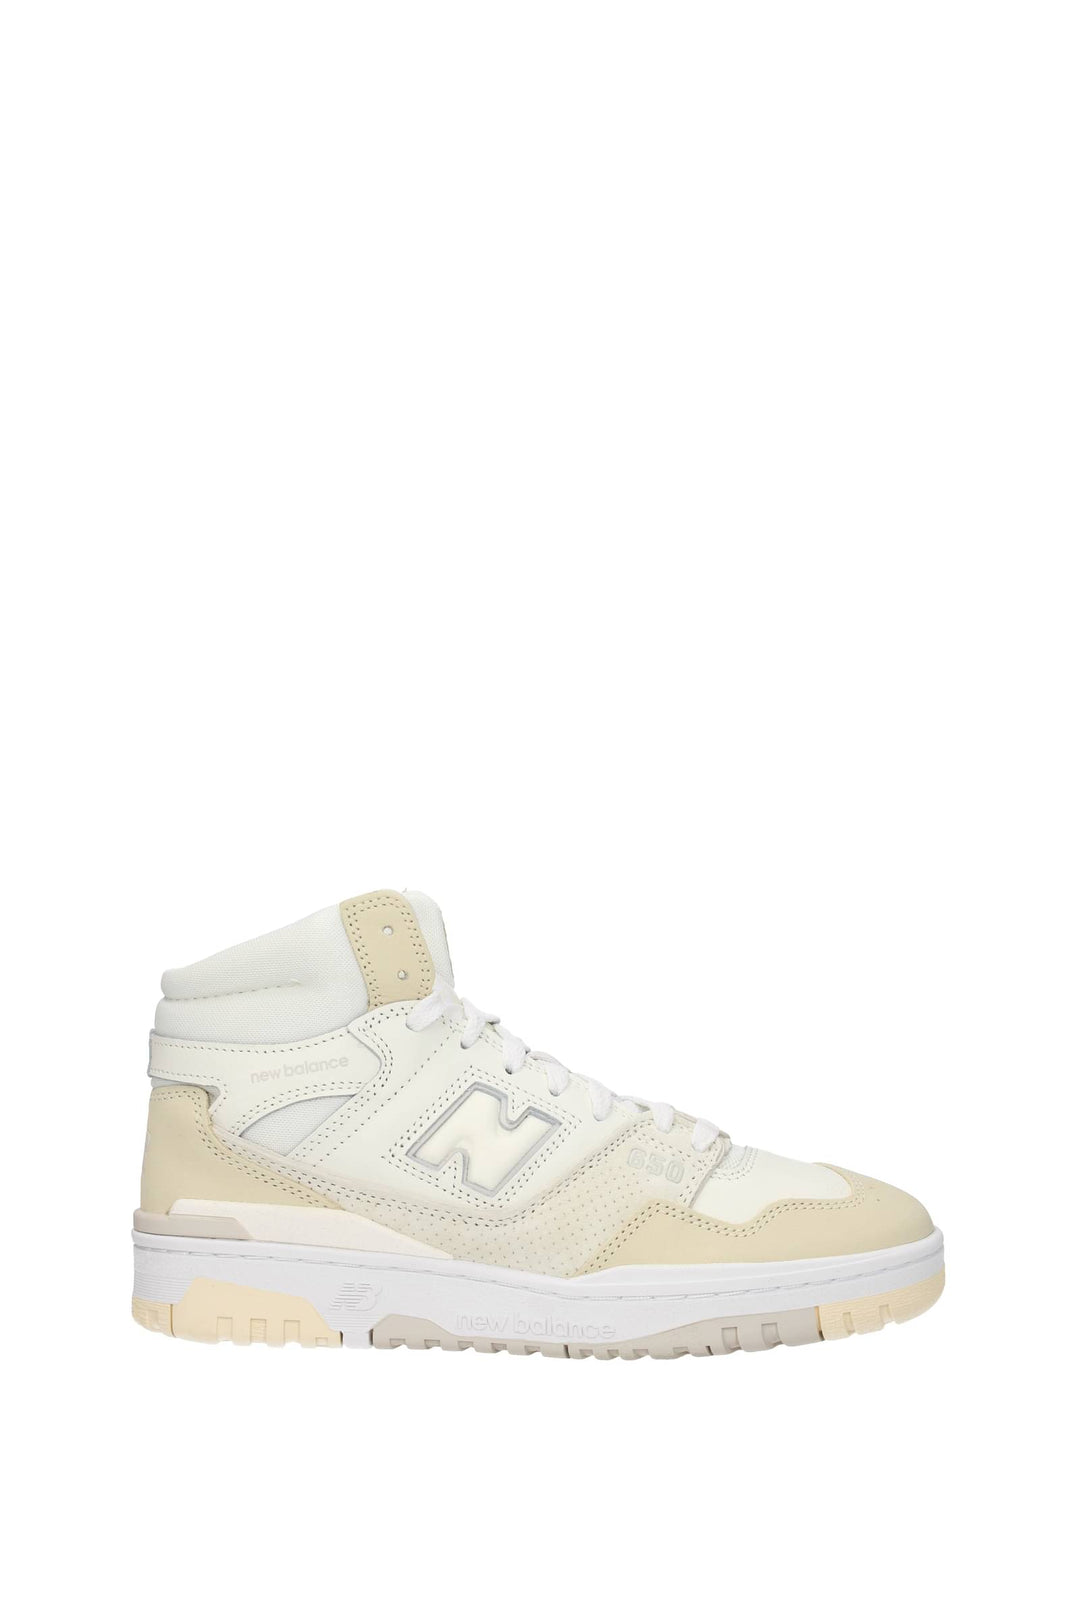 Sneakers 650 Pelle Bianco Noce - New Balance - Uomo